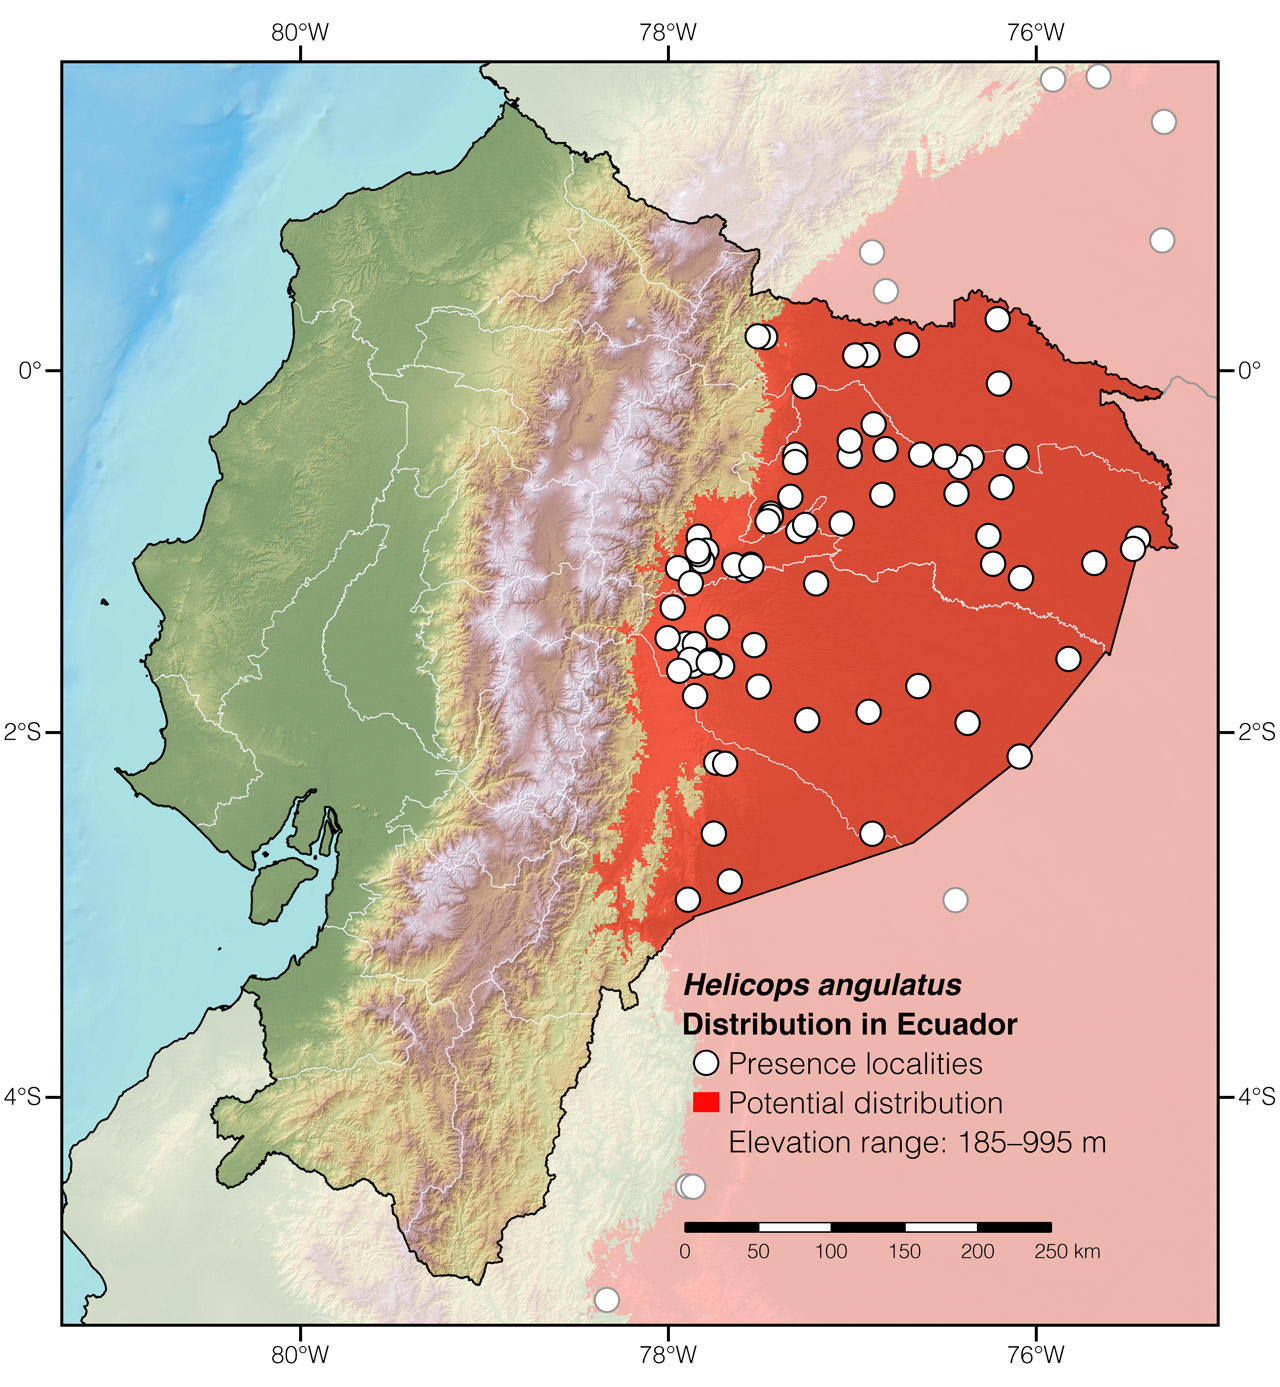 Distribution of Helicops angulatus in Ecuador